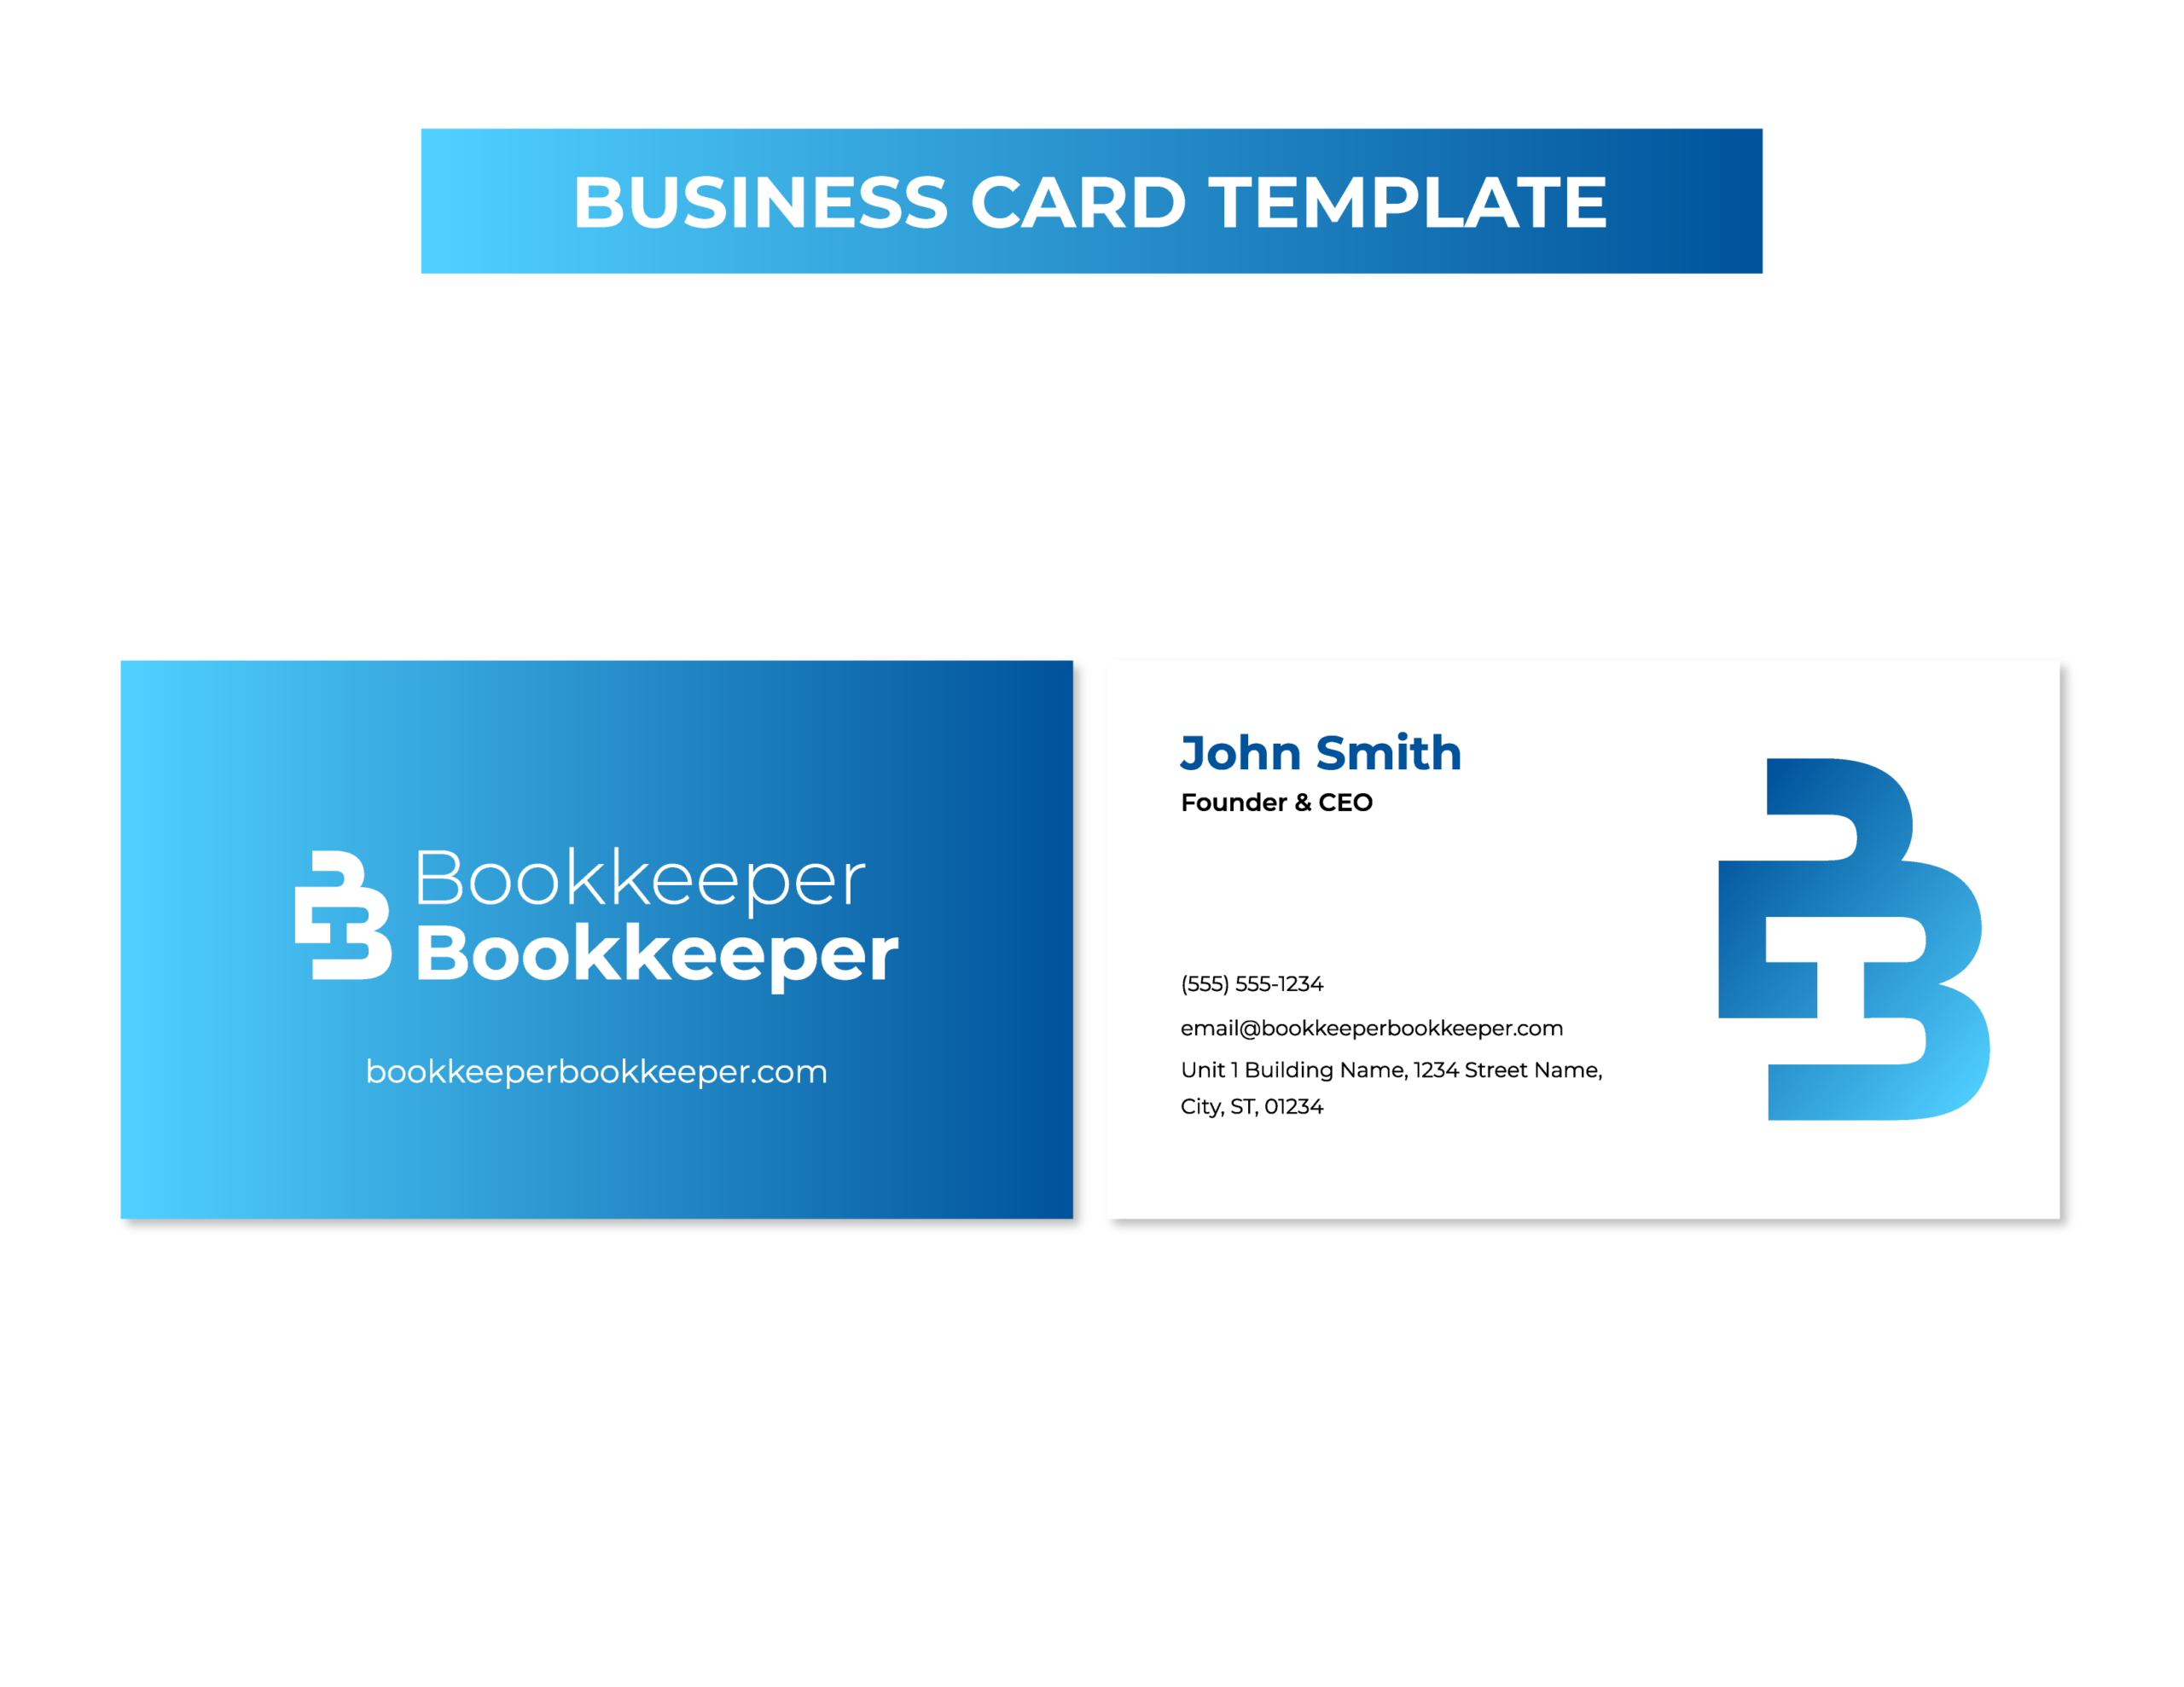 04BKBK_Business Card Template